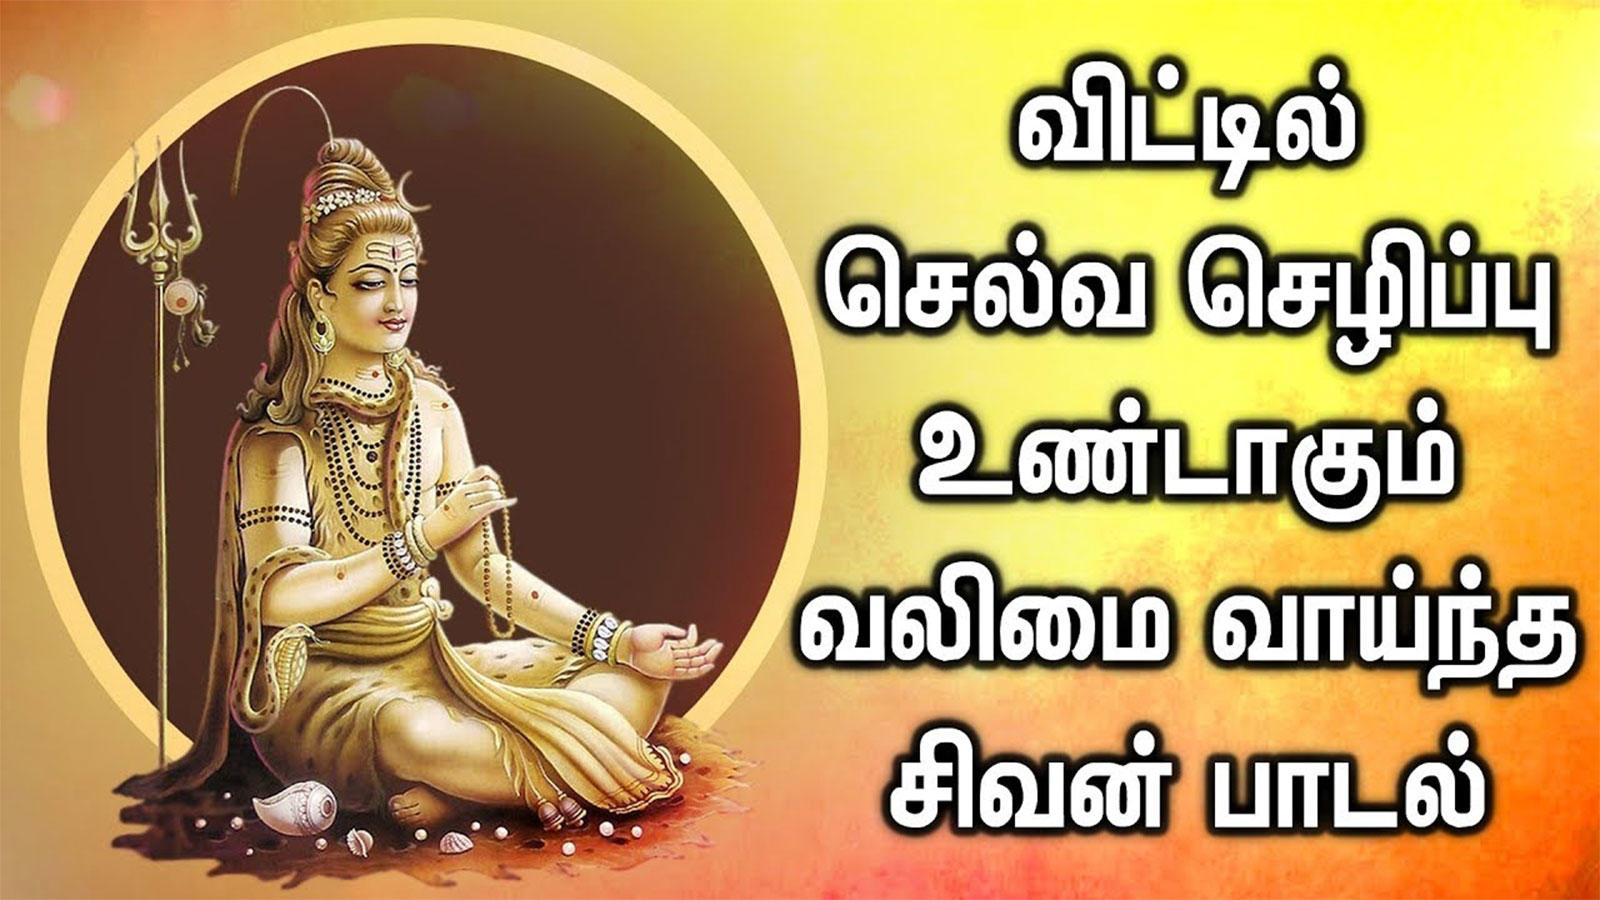 shiva devotional tamil songs